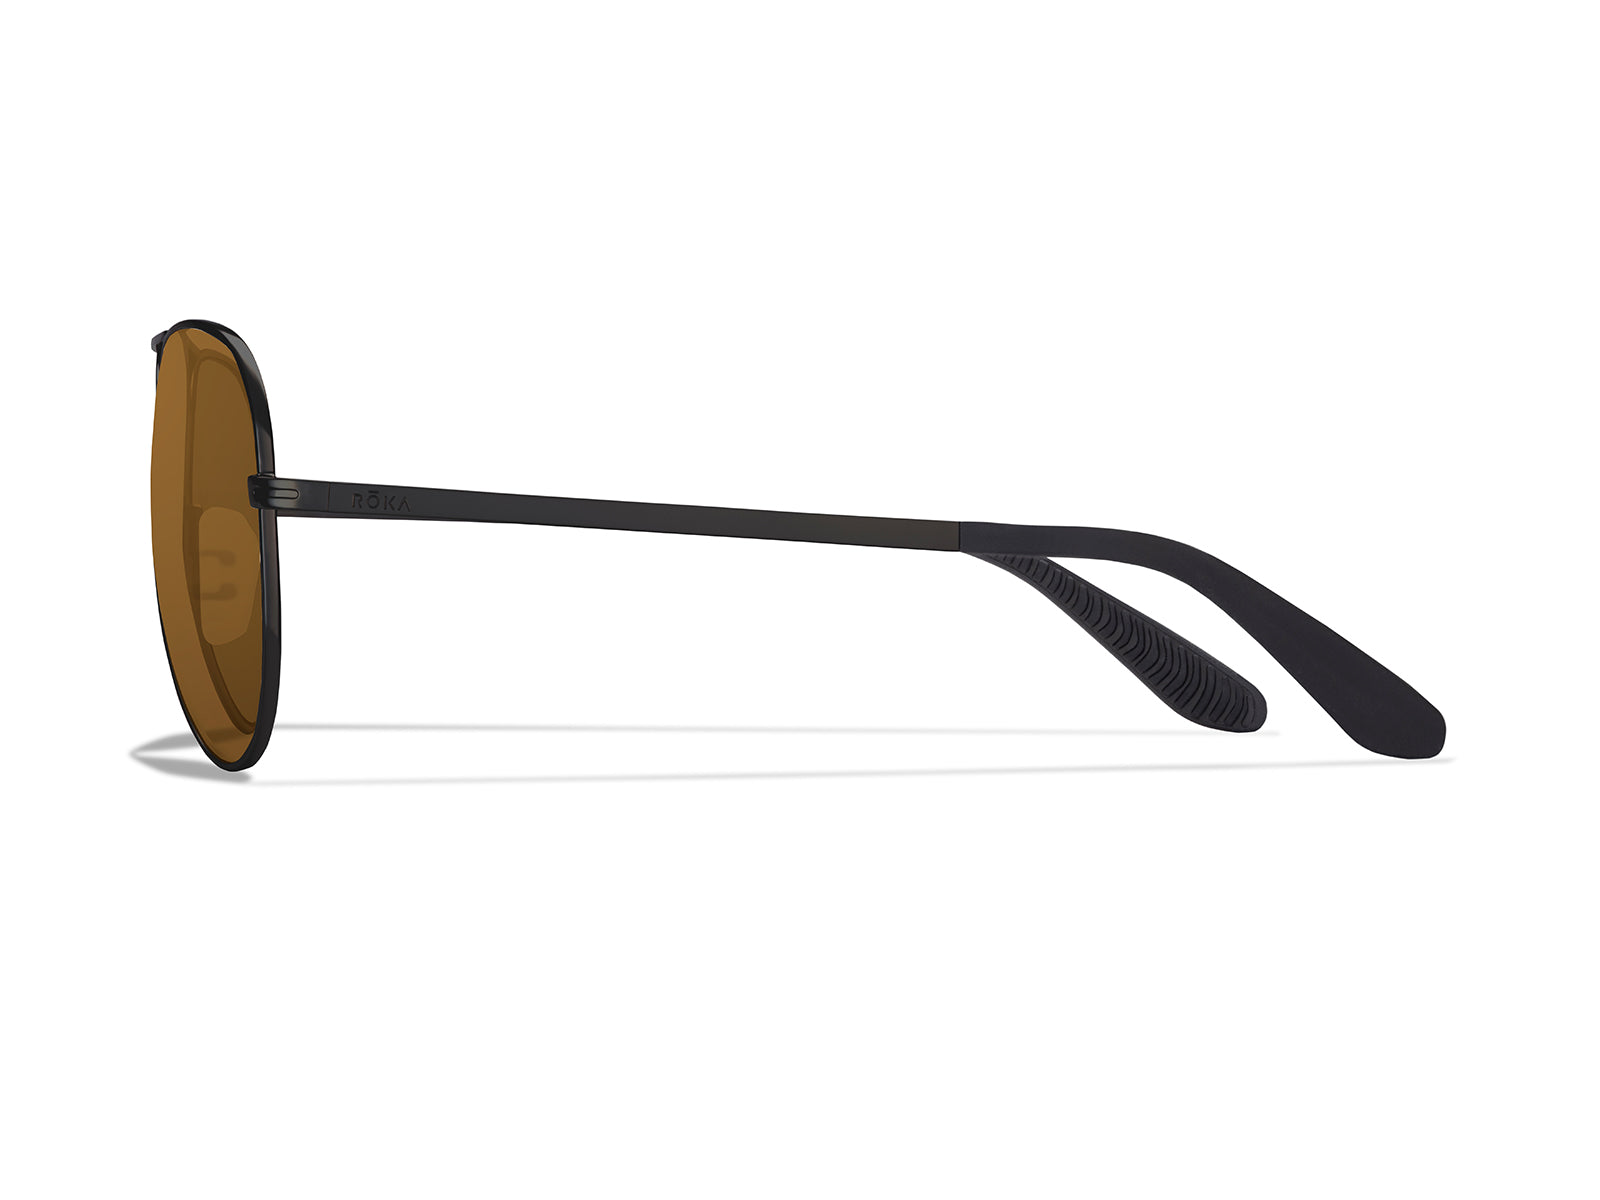 Roka Falcon Titanium Polarized Sunglasses Matte Black/Carbon, Reg 55